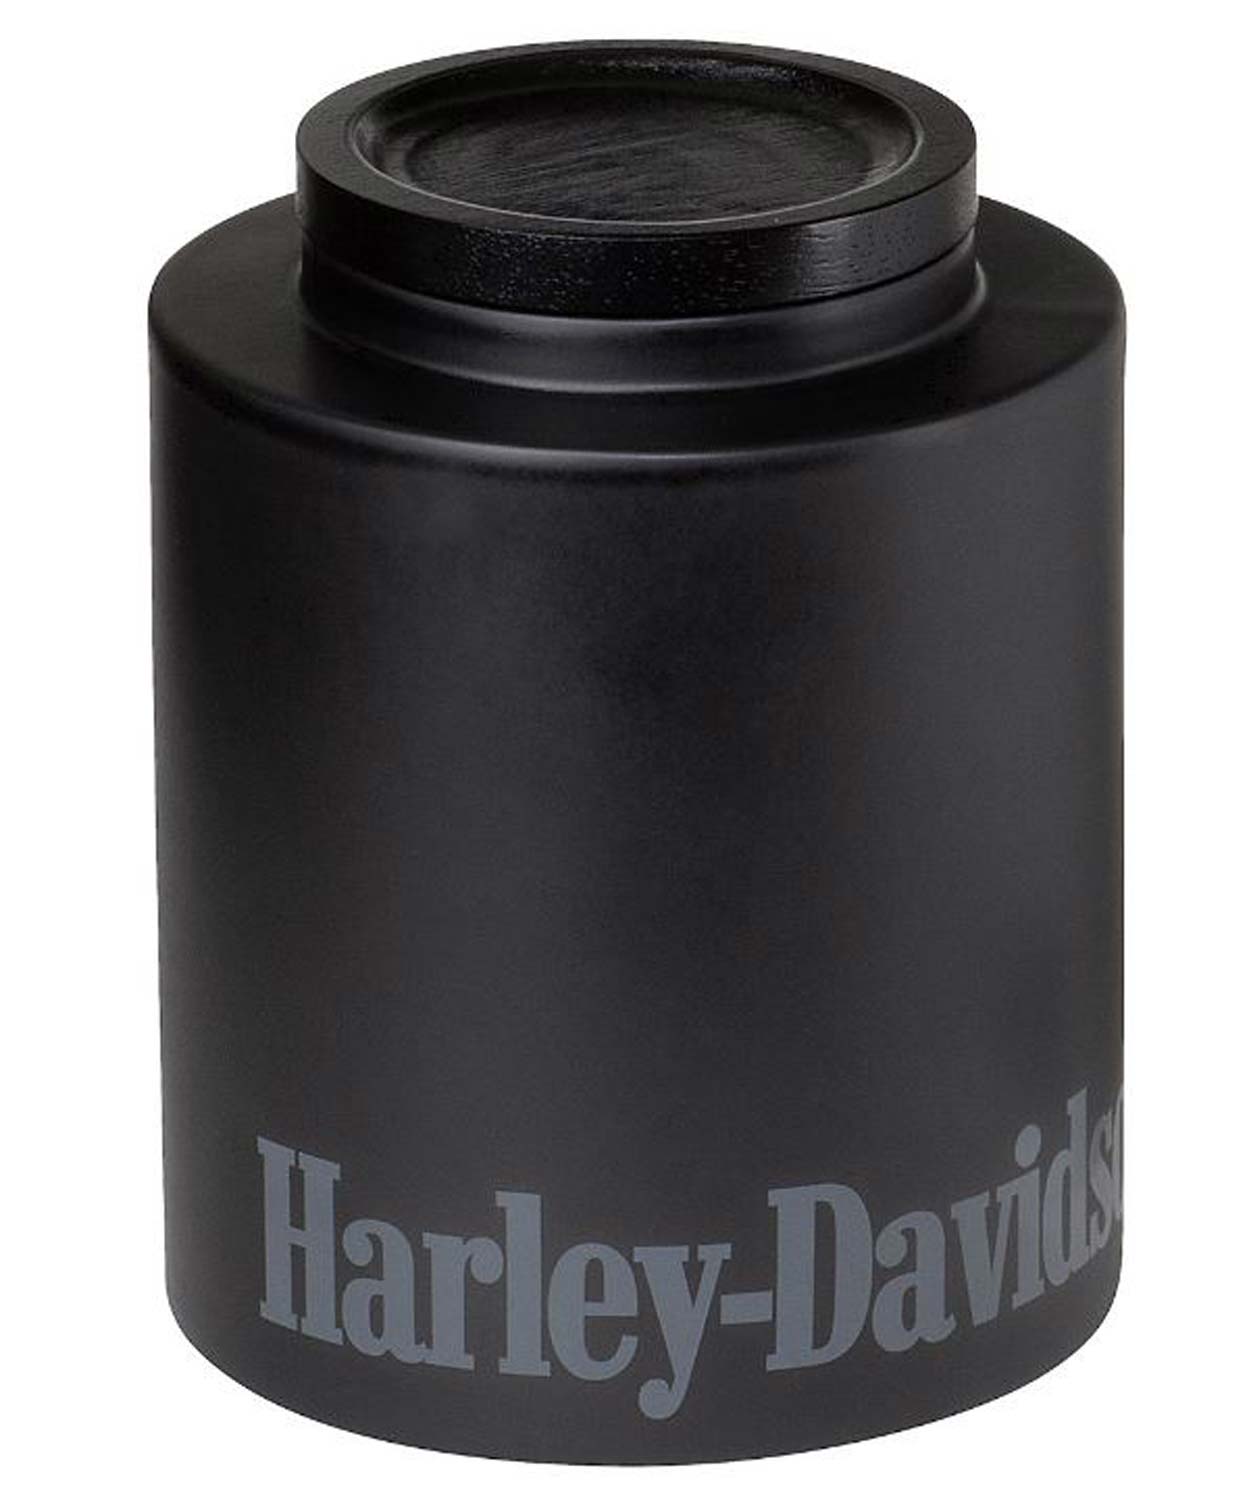 Harley-Davidson Small Black Cookie Jar